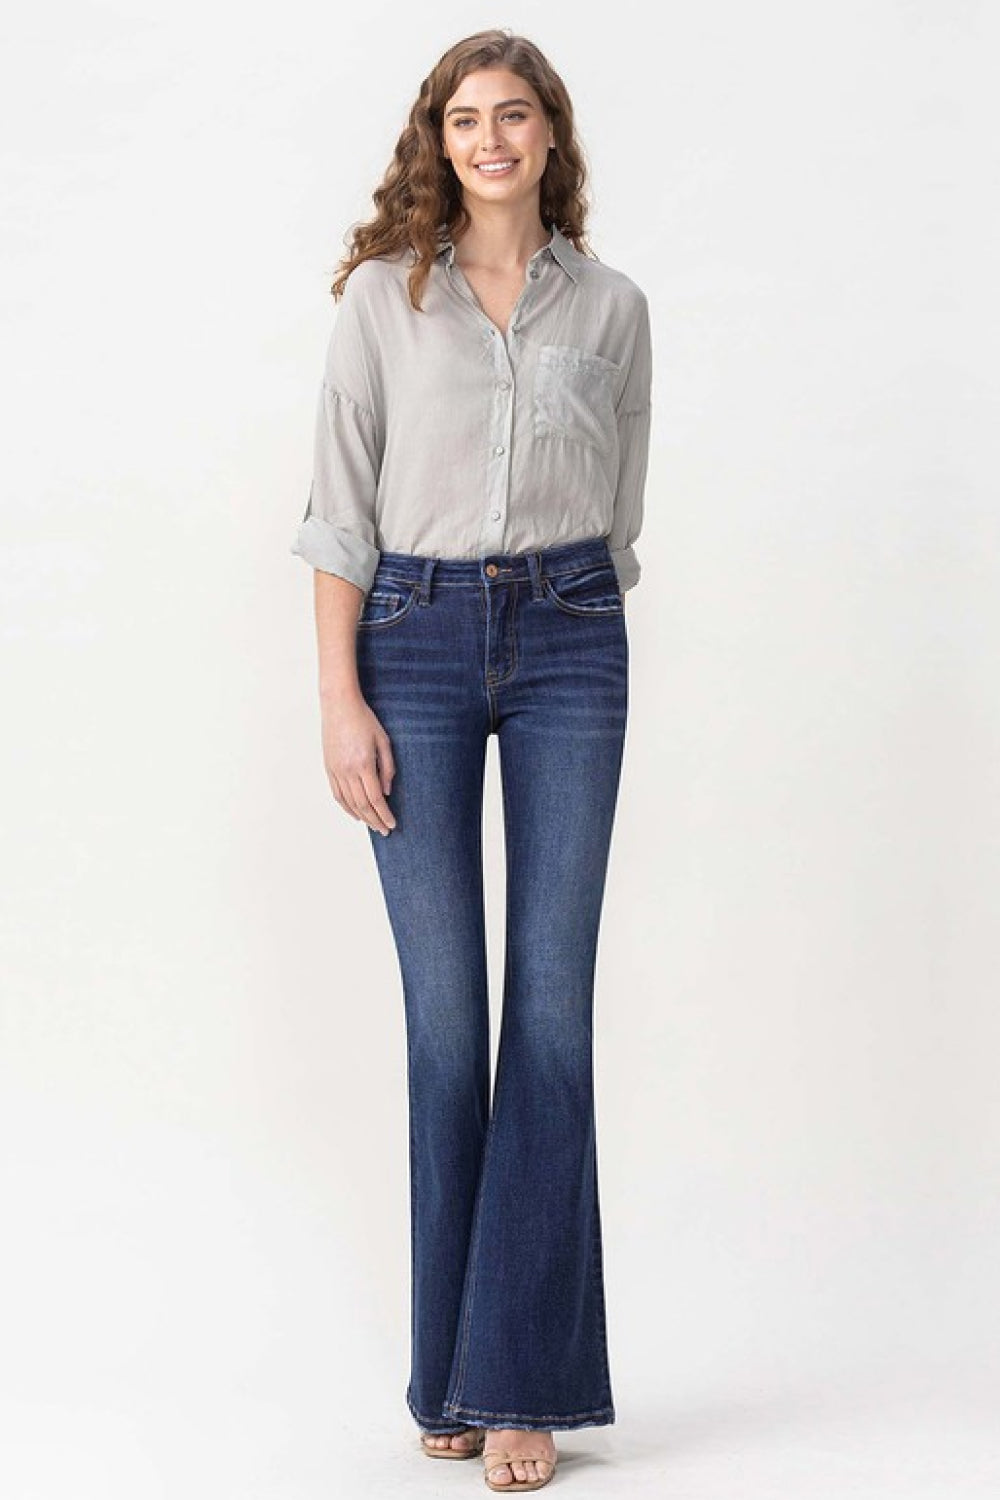 ⭐️ Lovervet Joanna Mid-rise Flare Jeans